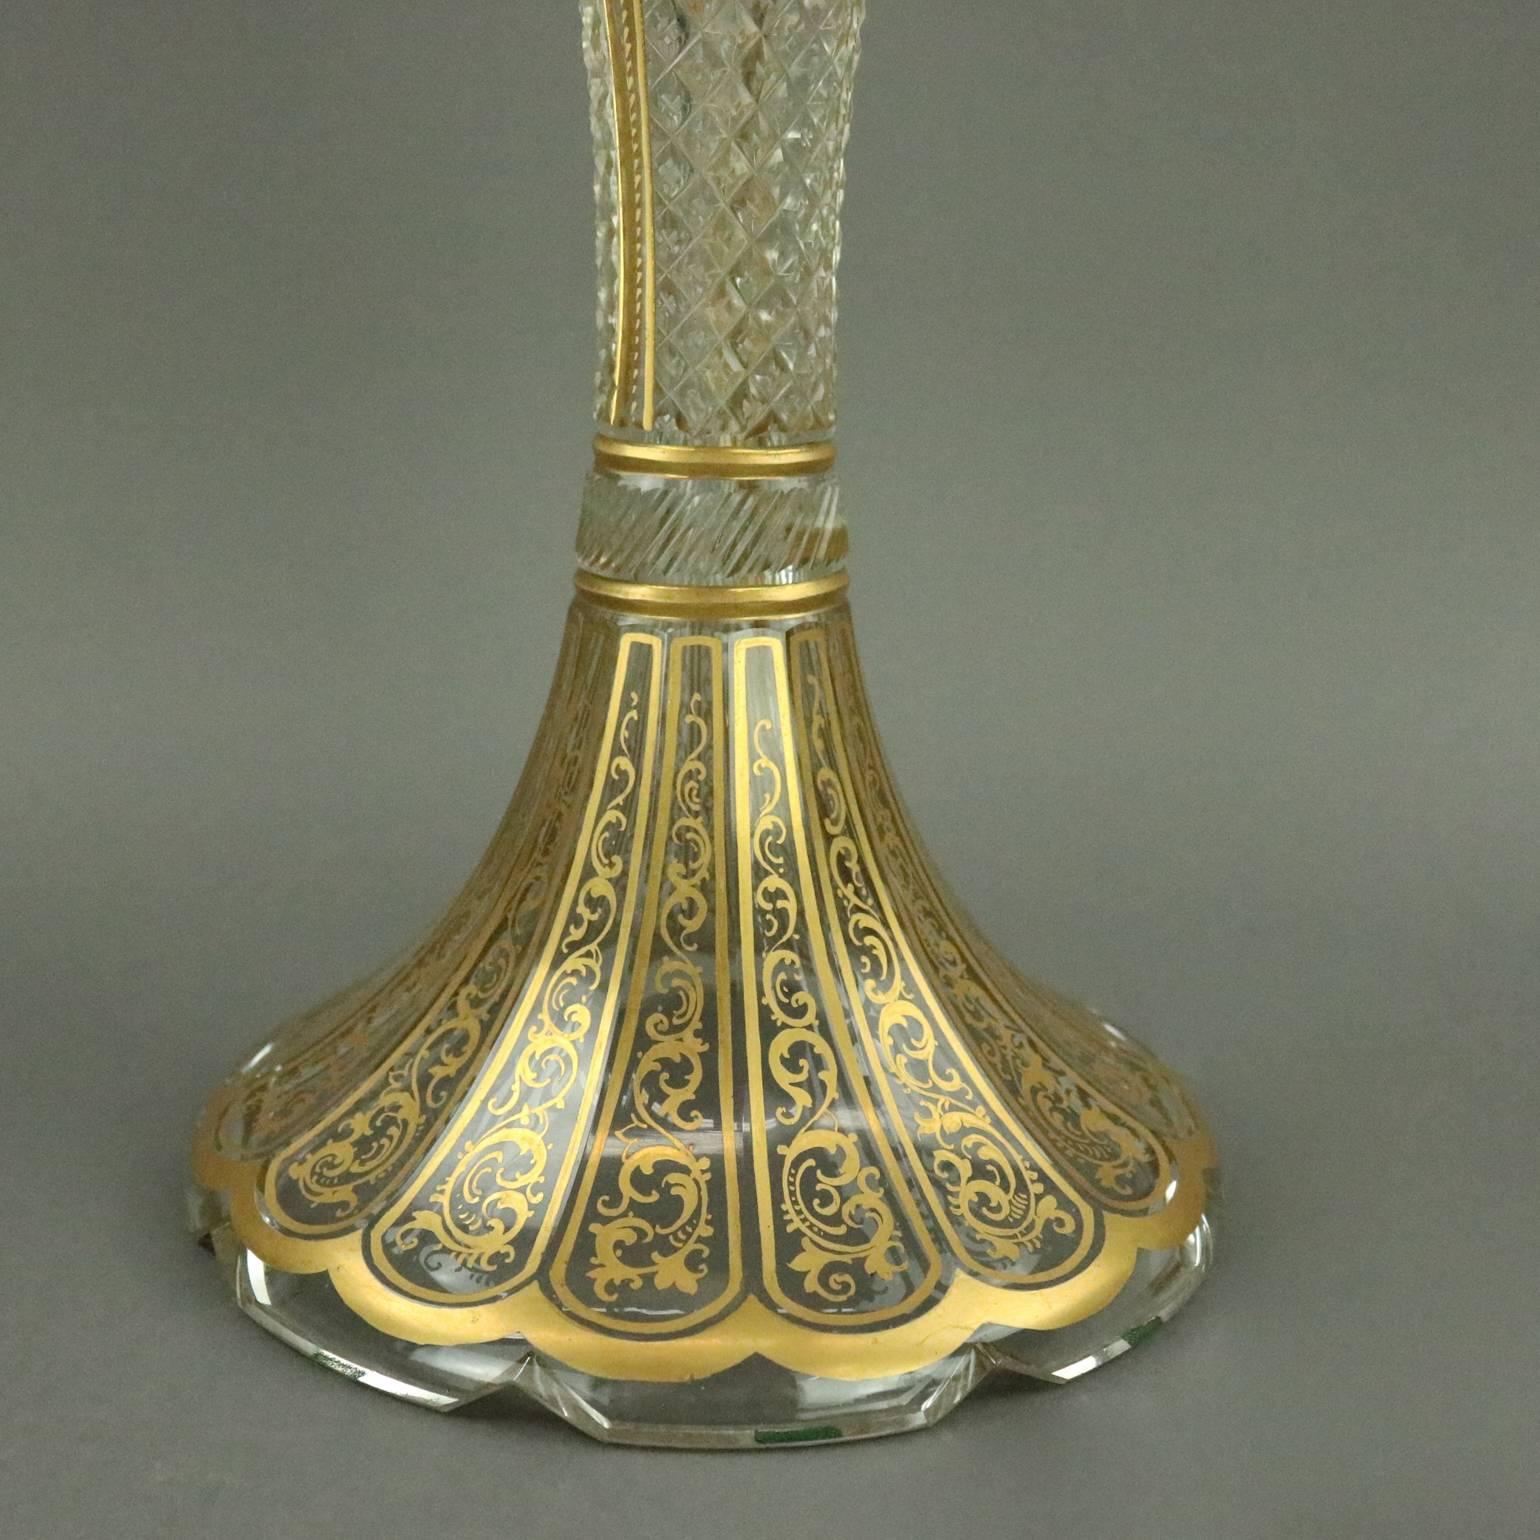 Antique Bradley & Hubbard Cut-Glass Gilt Decorated Electric Banquet Lamp 2